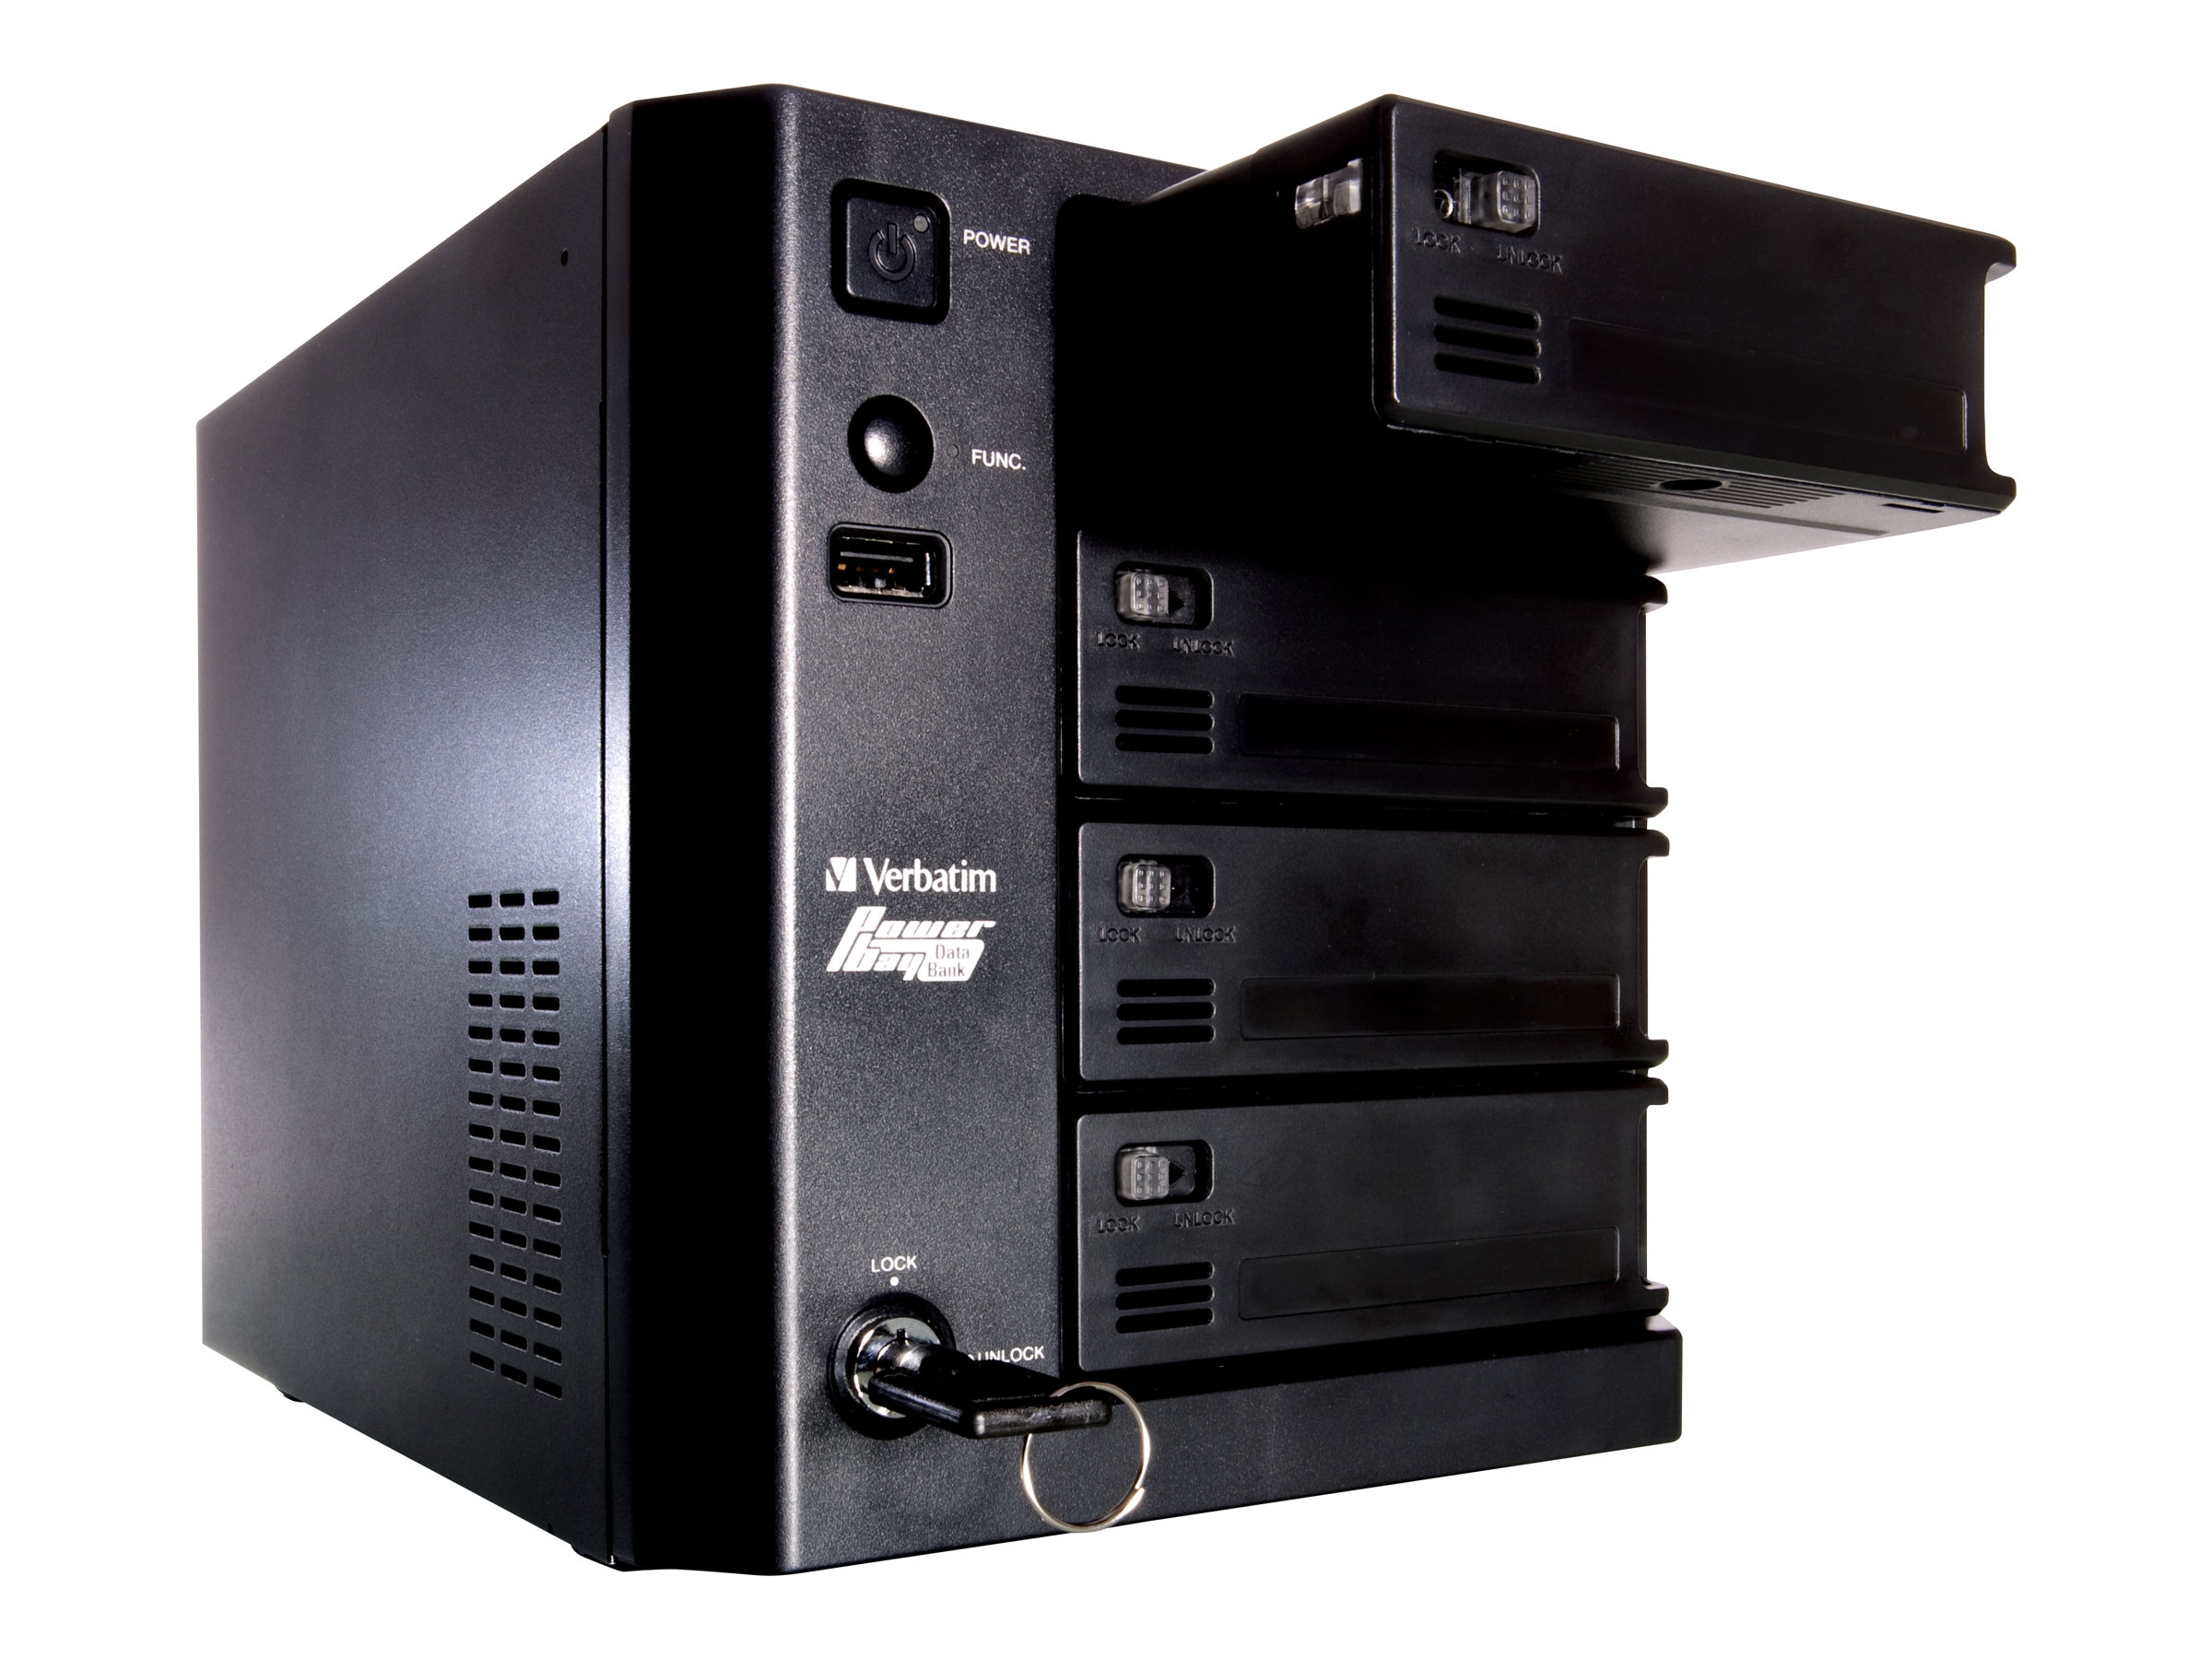 Verbatim PowerBay DataBank - Serveur NAS - 4 Baies - 8 To - SATA 3Gb/s - HDD 2 To x 4 - RAID RAID 0, 1, 5, 6, disque de réserve 5 - Gigabit Ethernet - 47484 - NAS